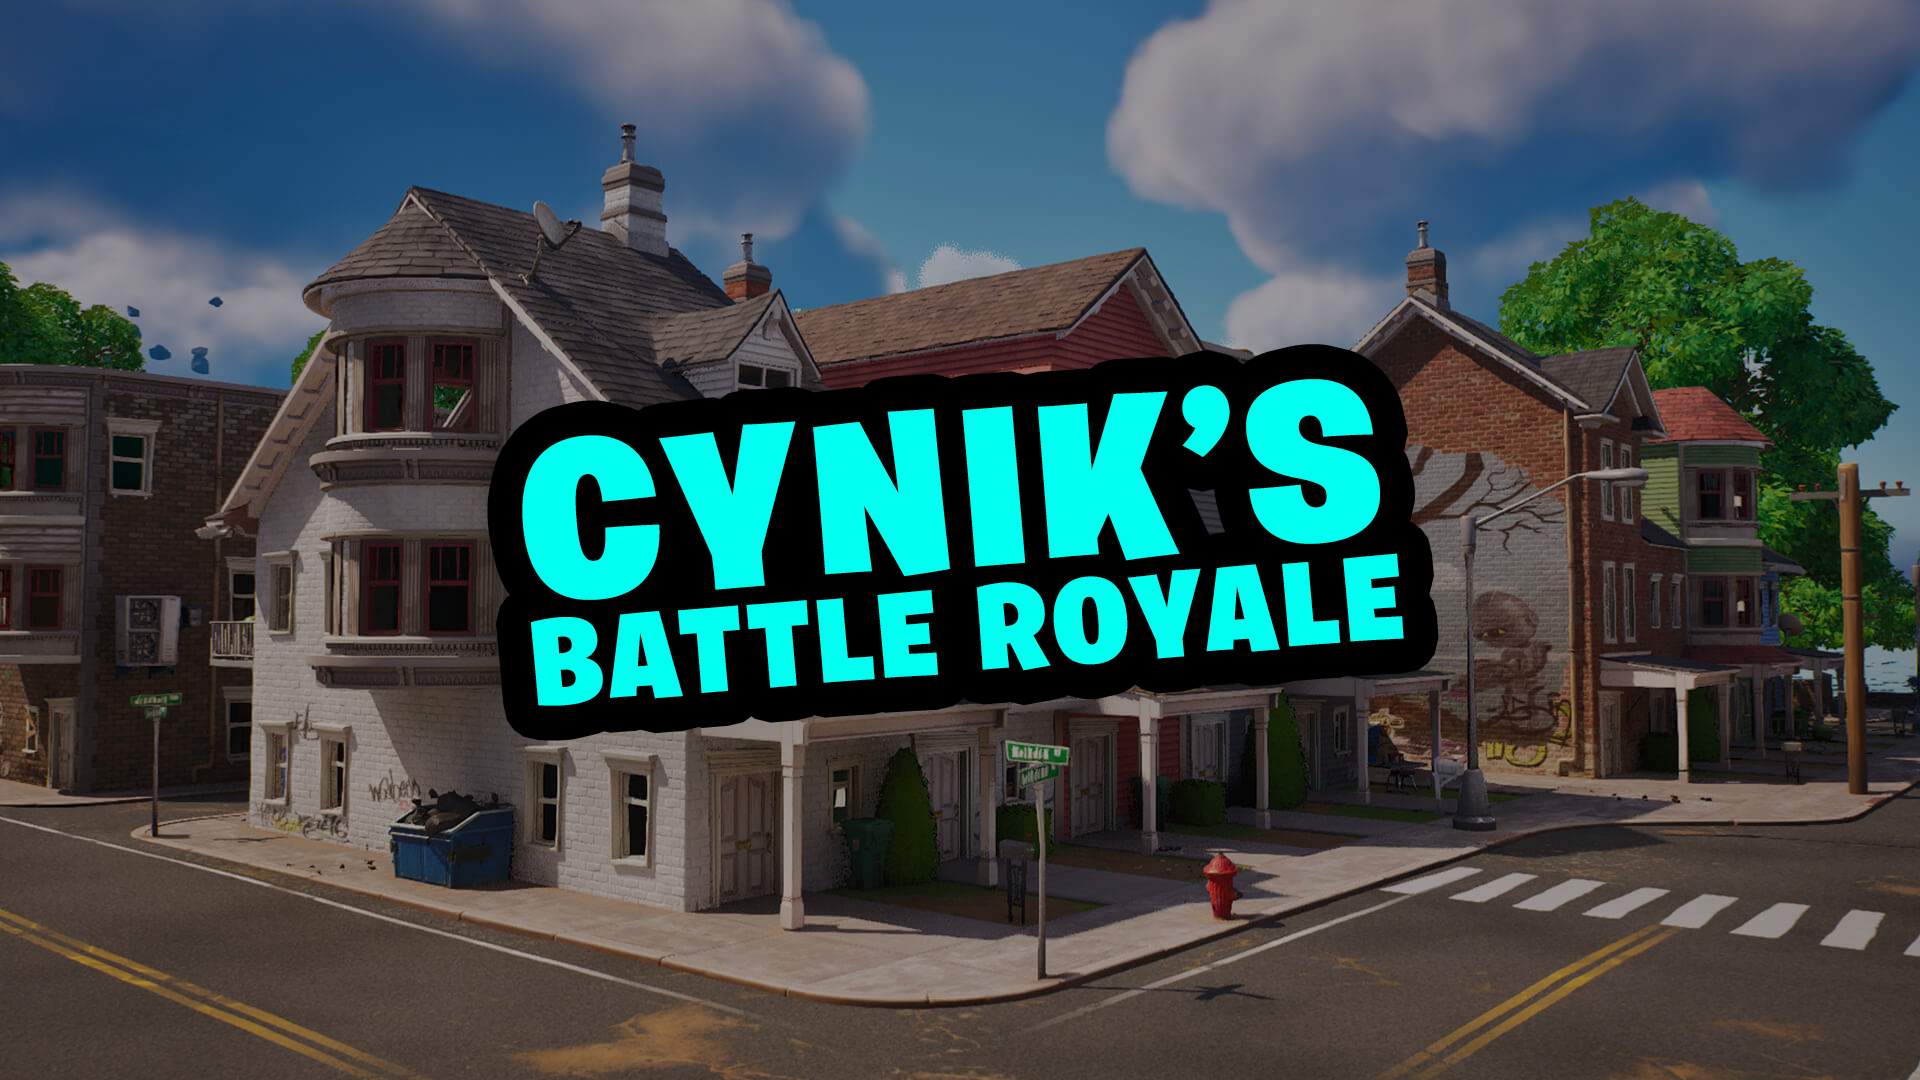 CynikTG's Battle Royale